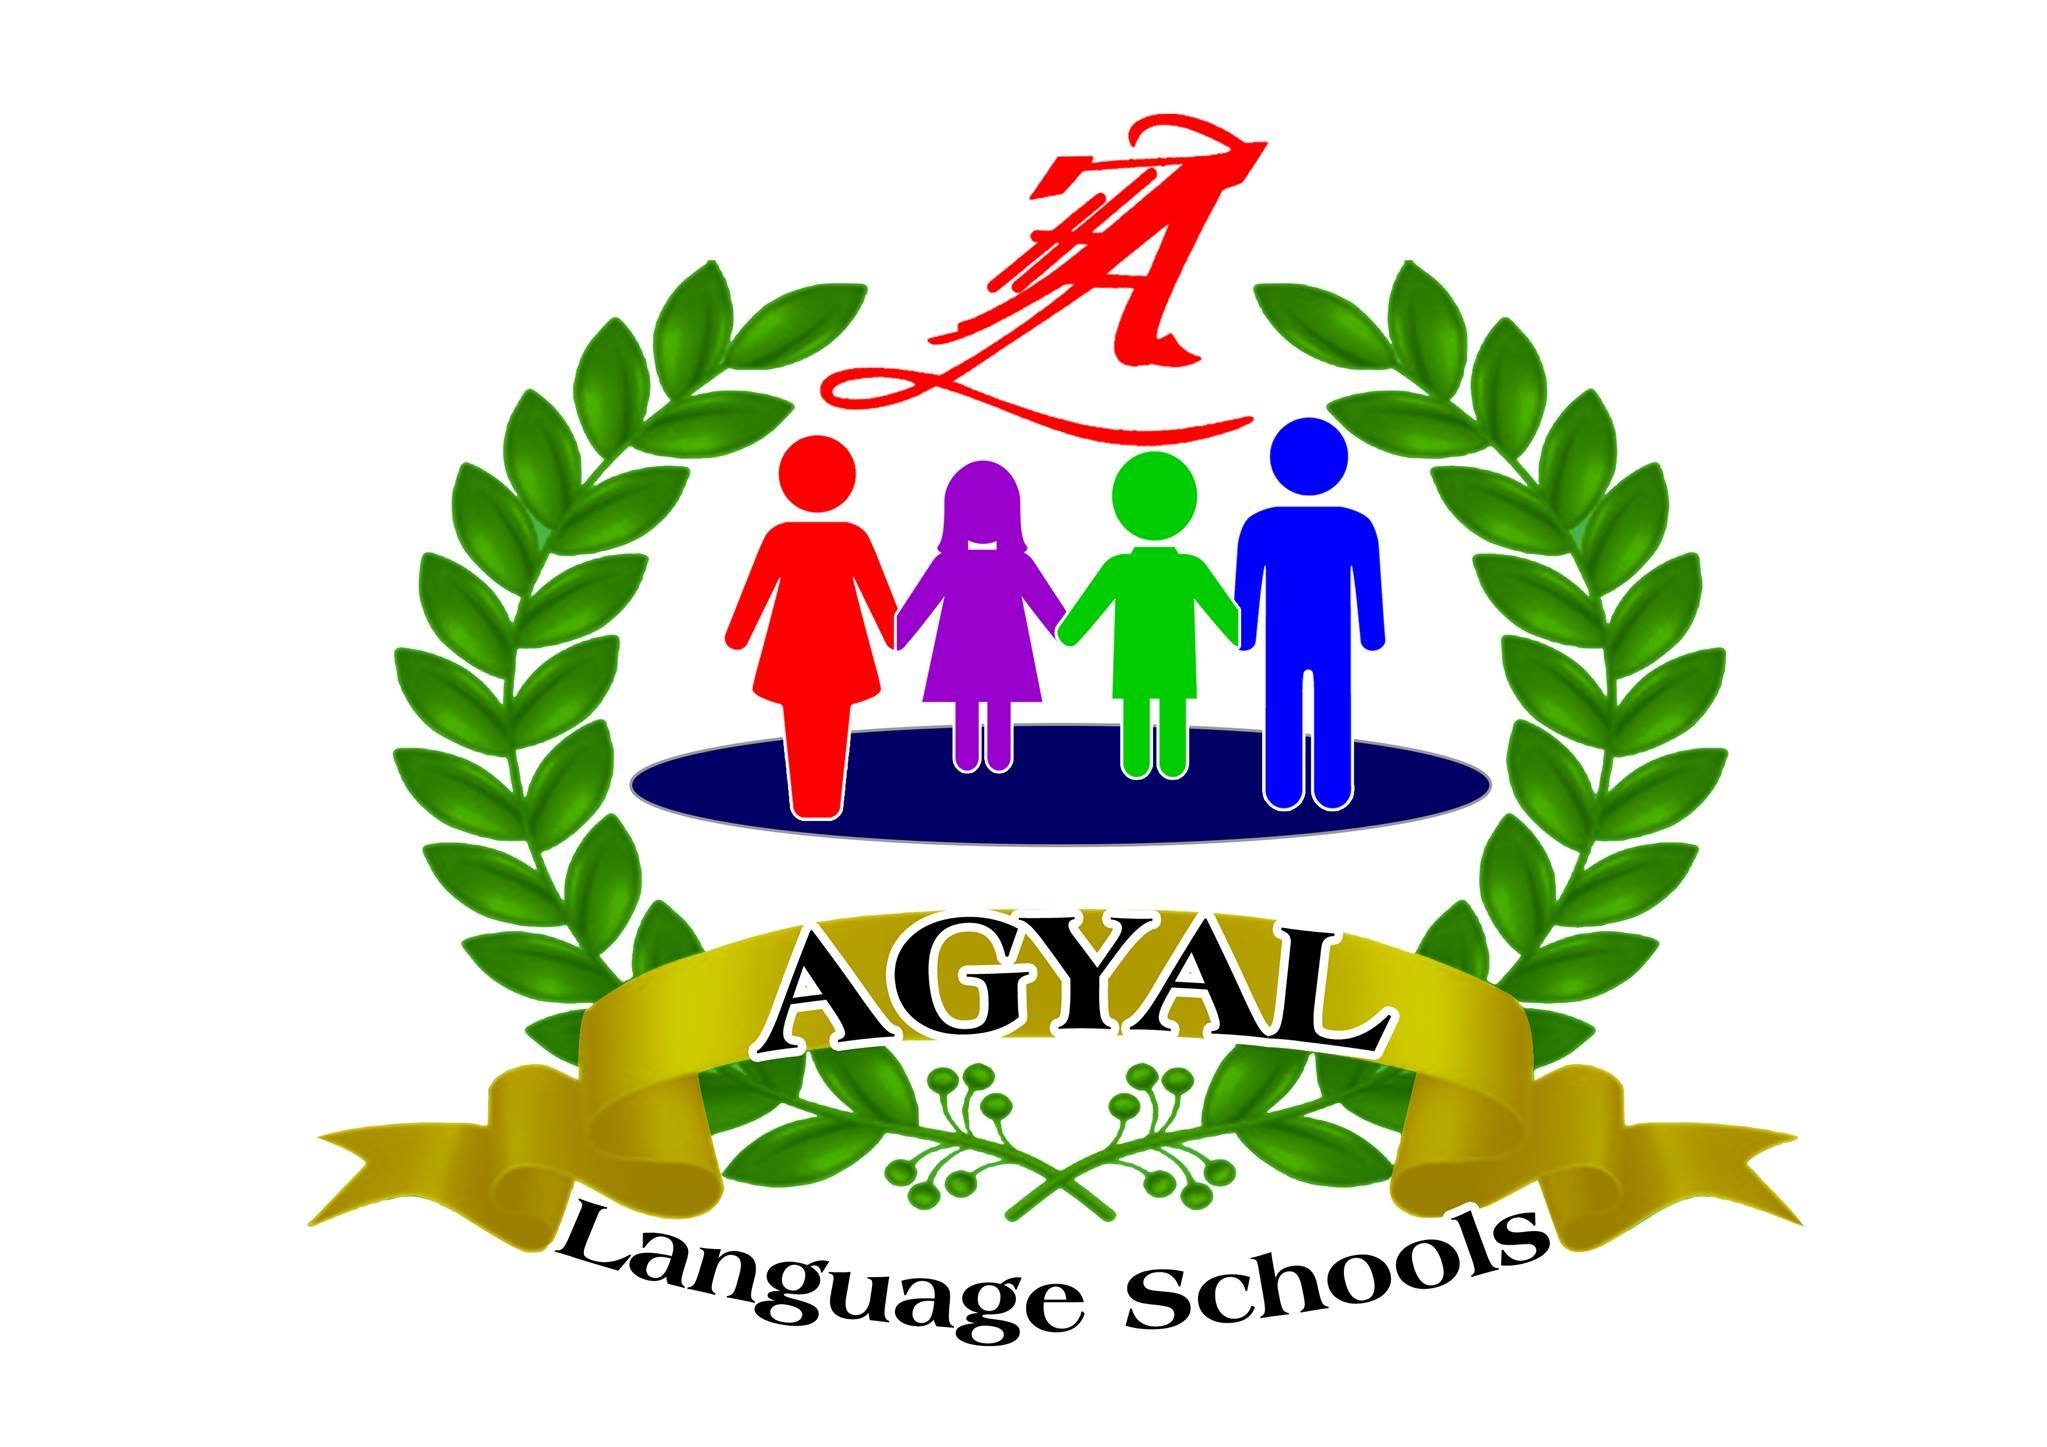 Agyal Integrated Schools logo.jpg